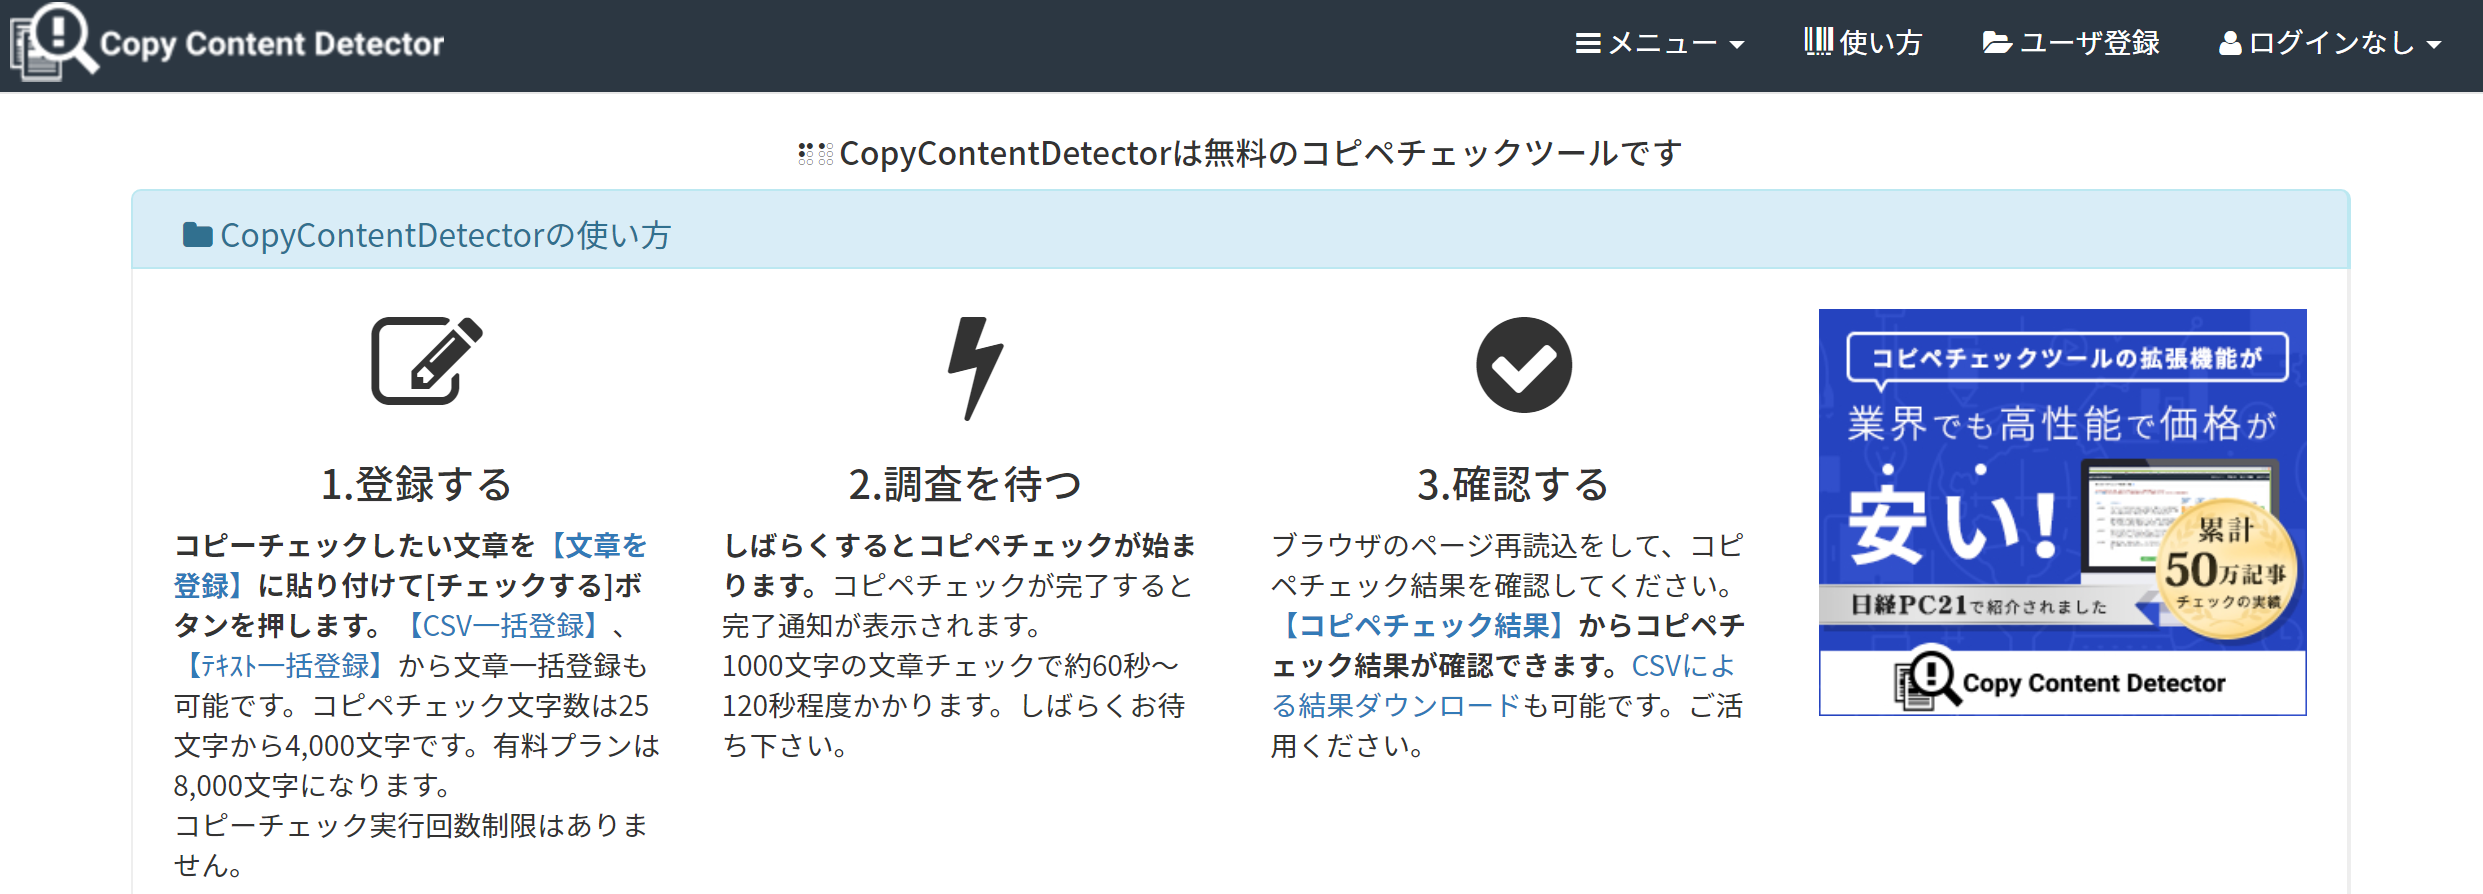 CopyContentDetector